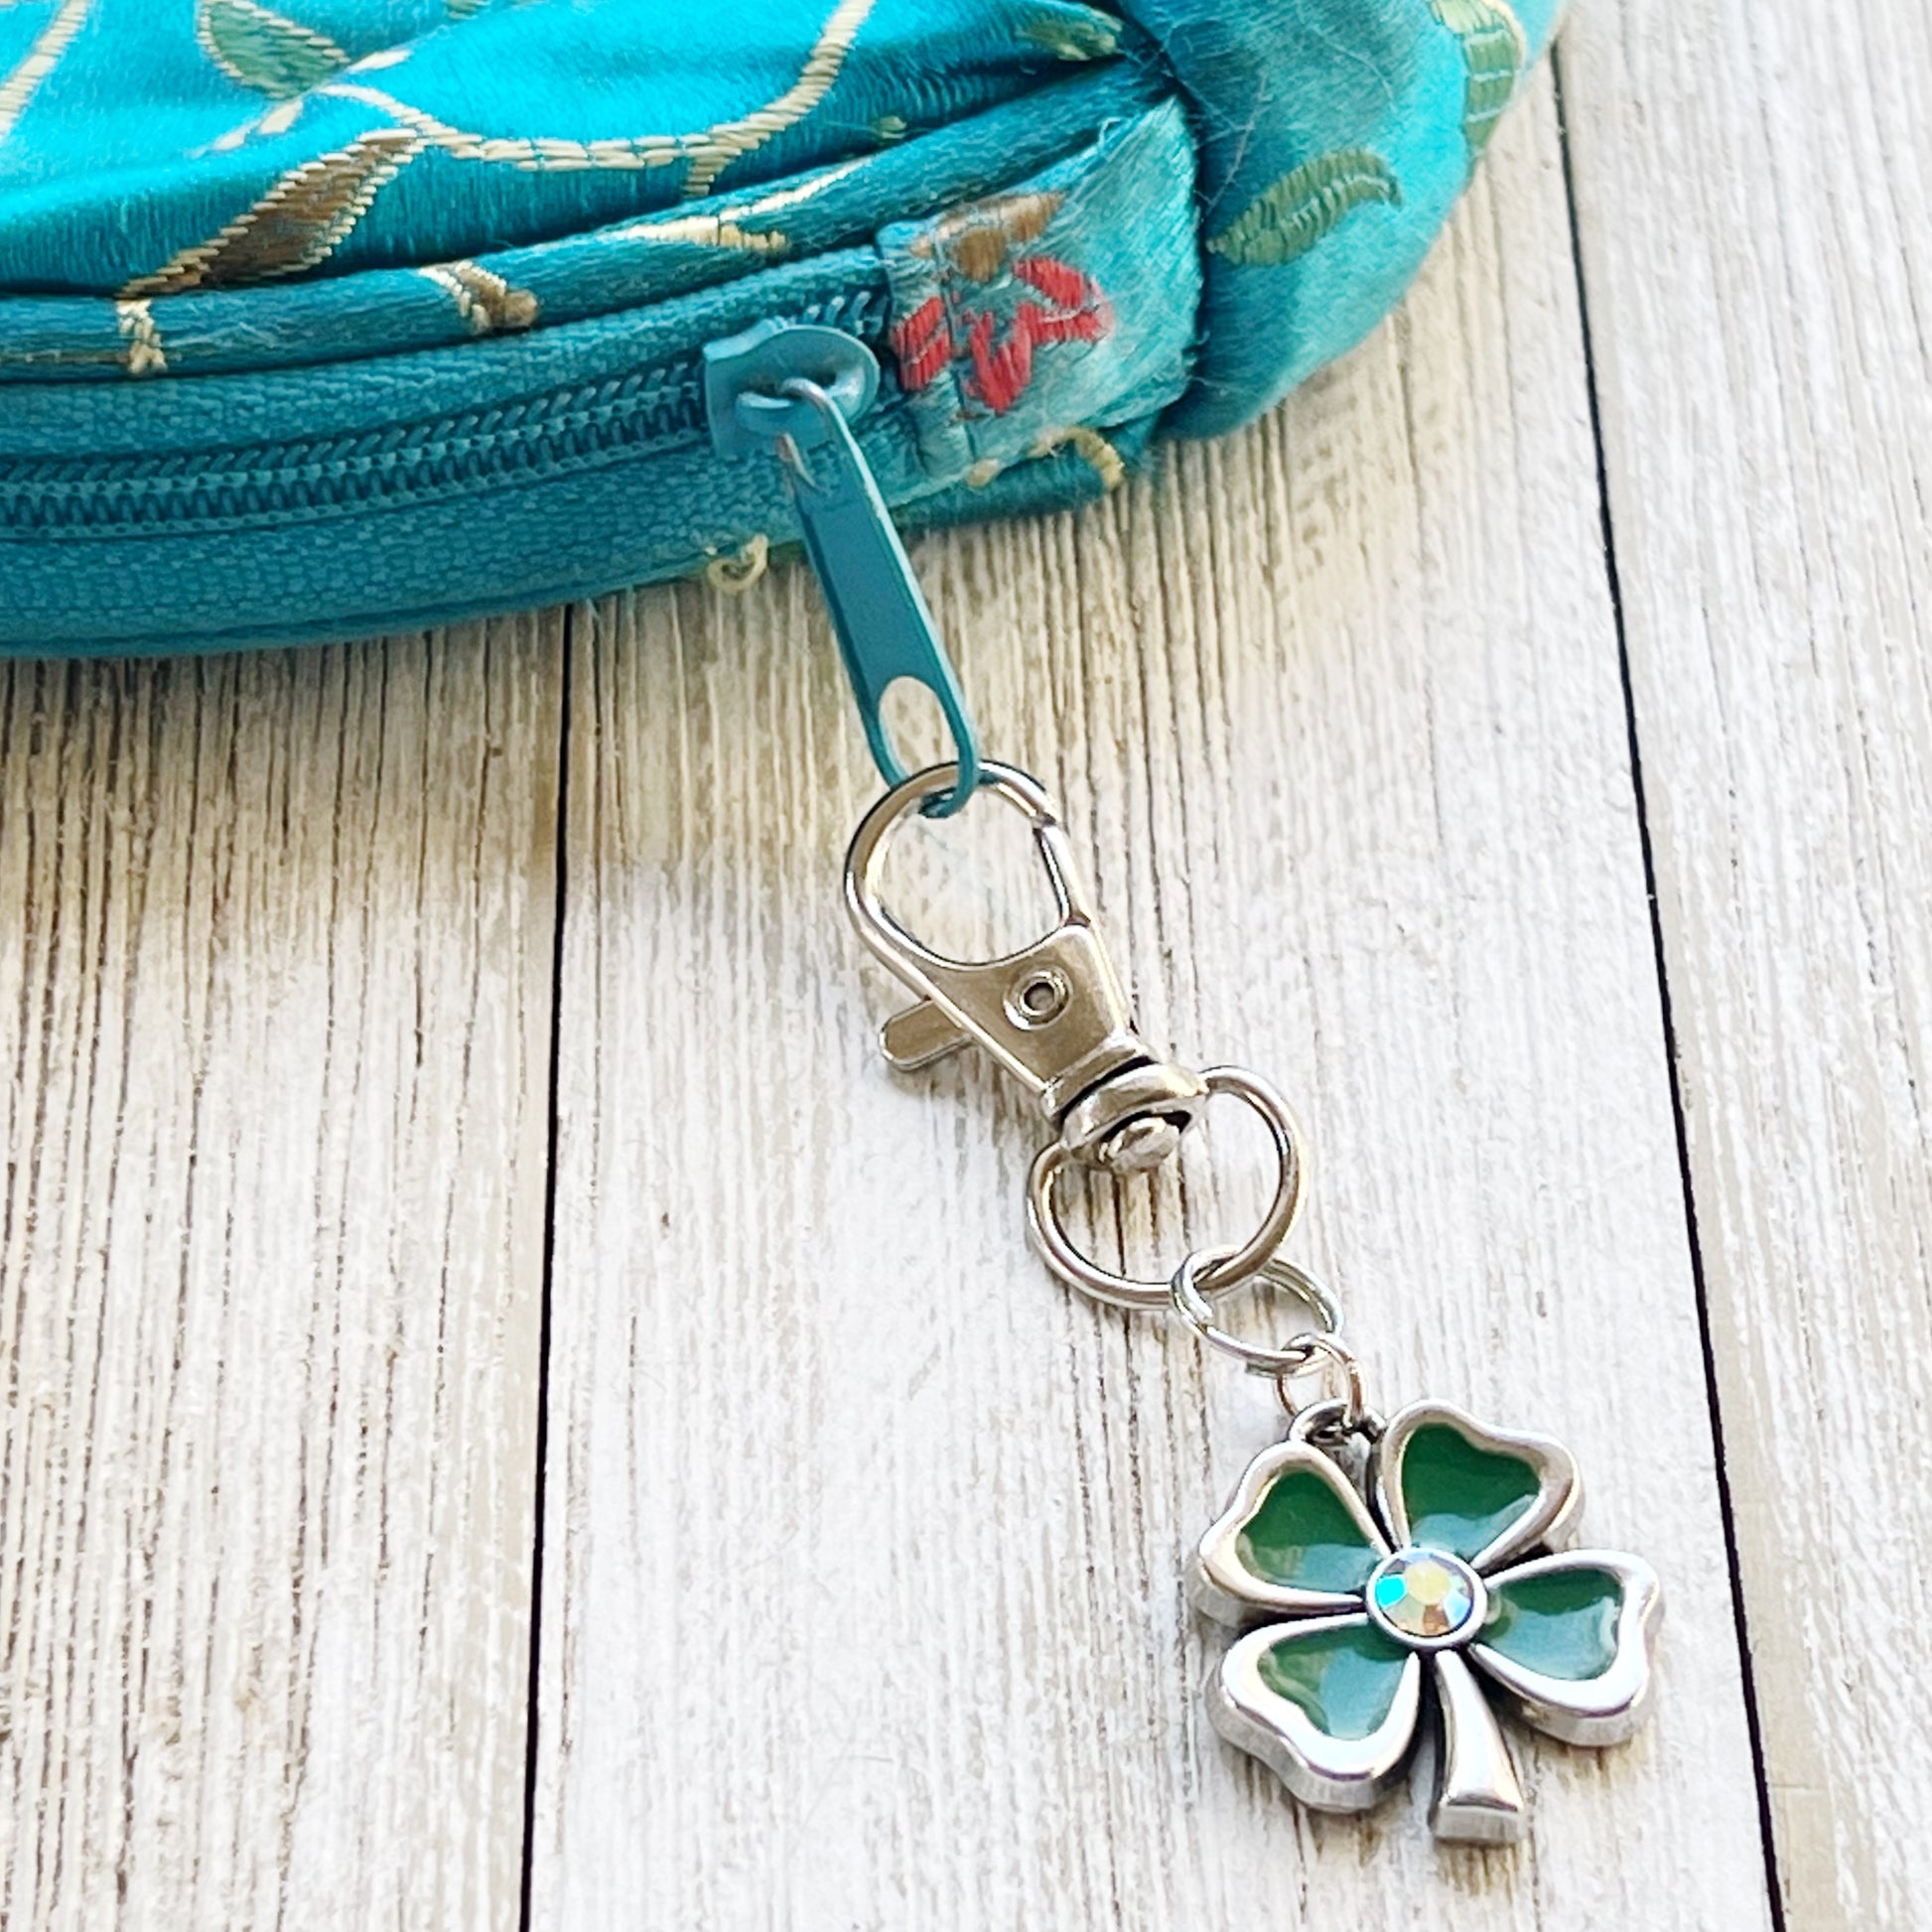 Four Leaf Clover Zipper Pull Keychain Purse Charm - Rhinestone Embellished Lucky Charm